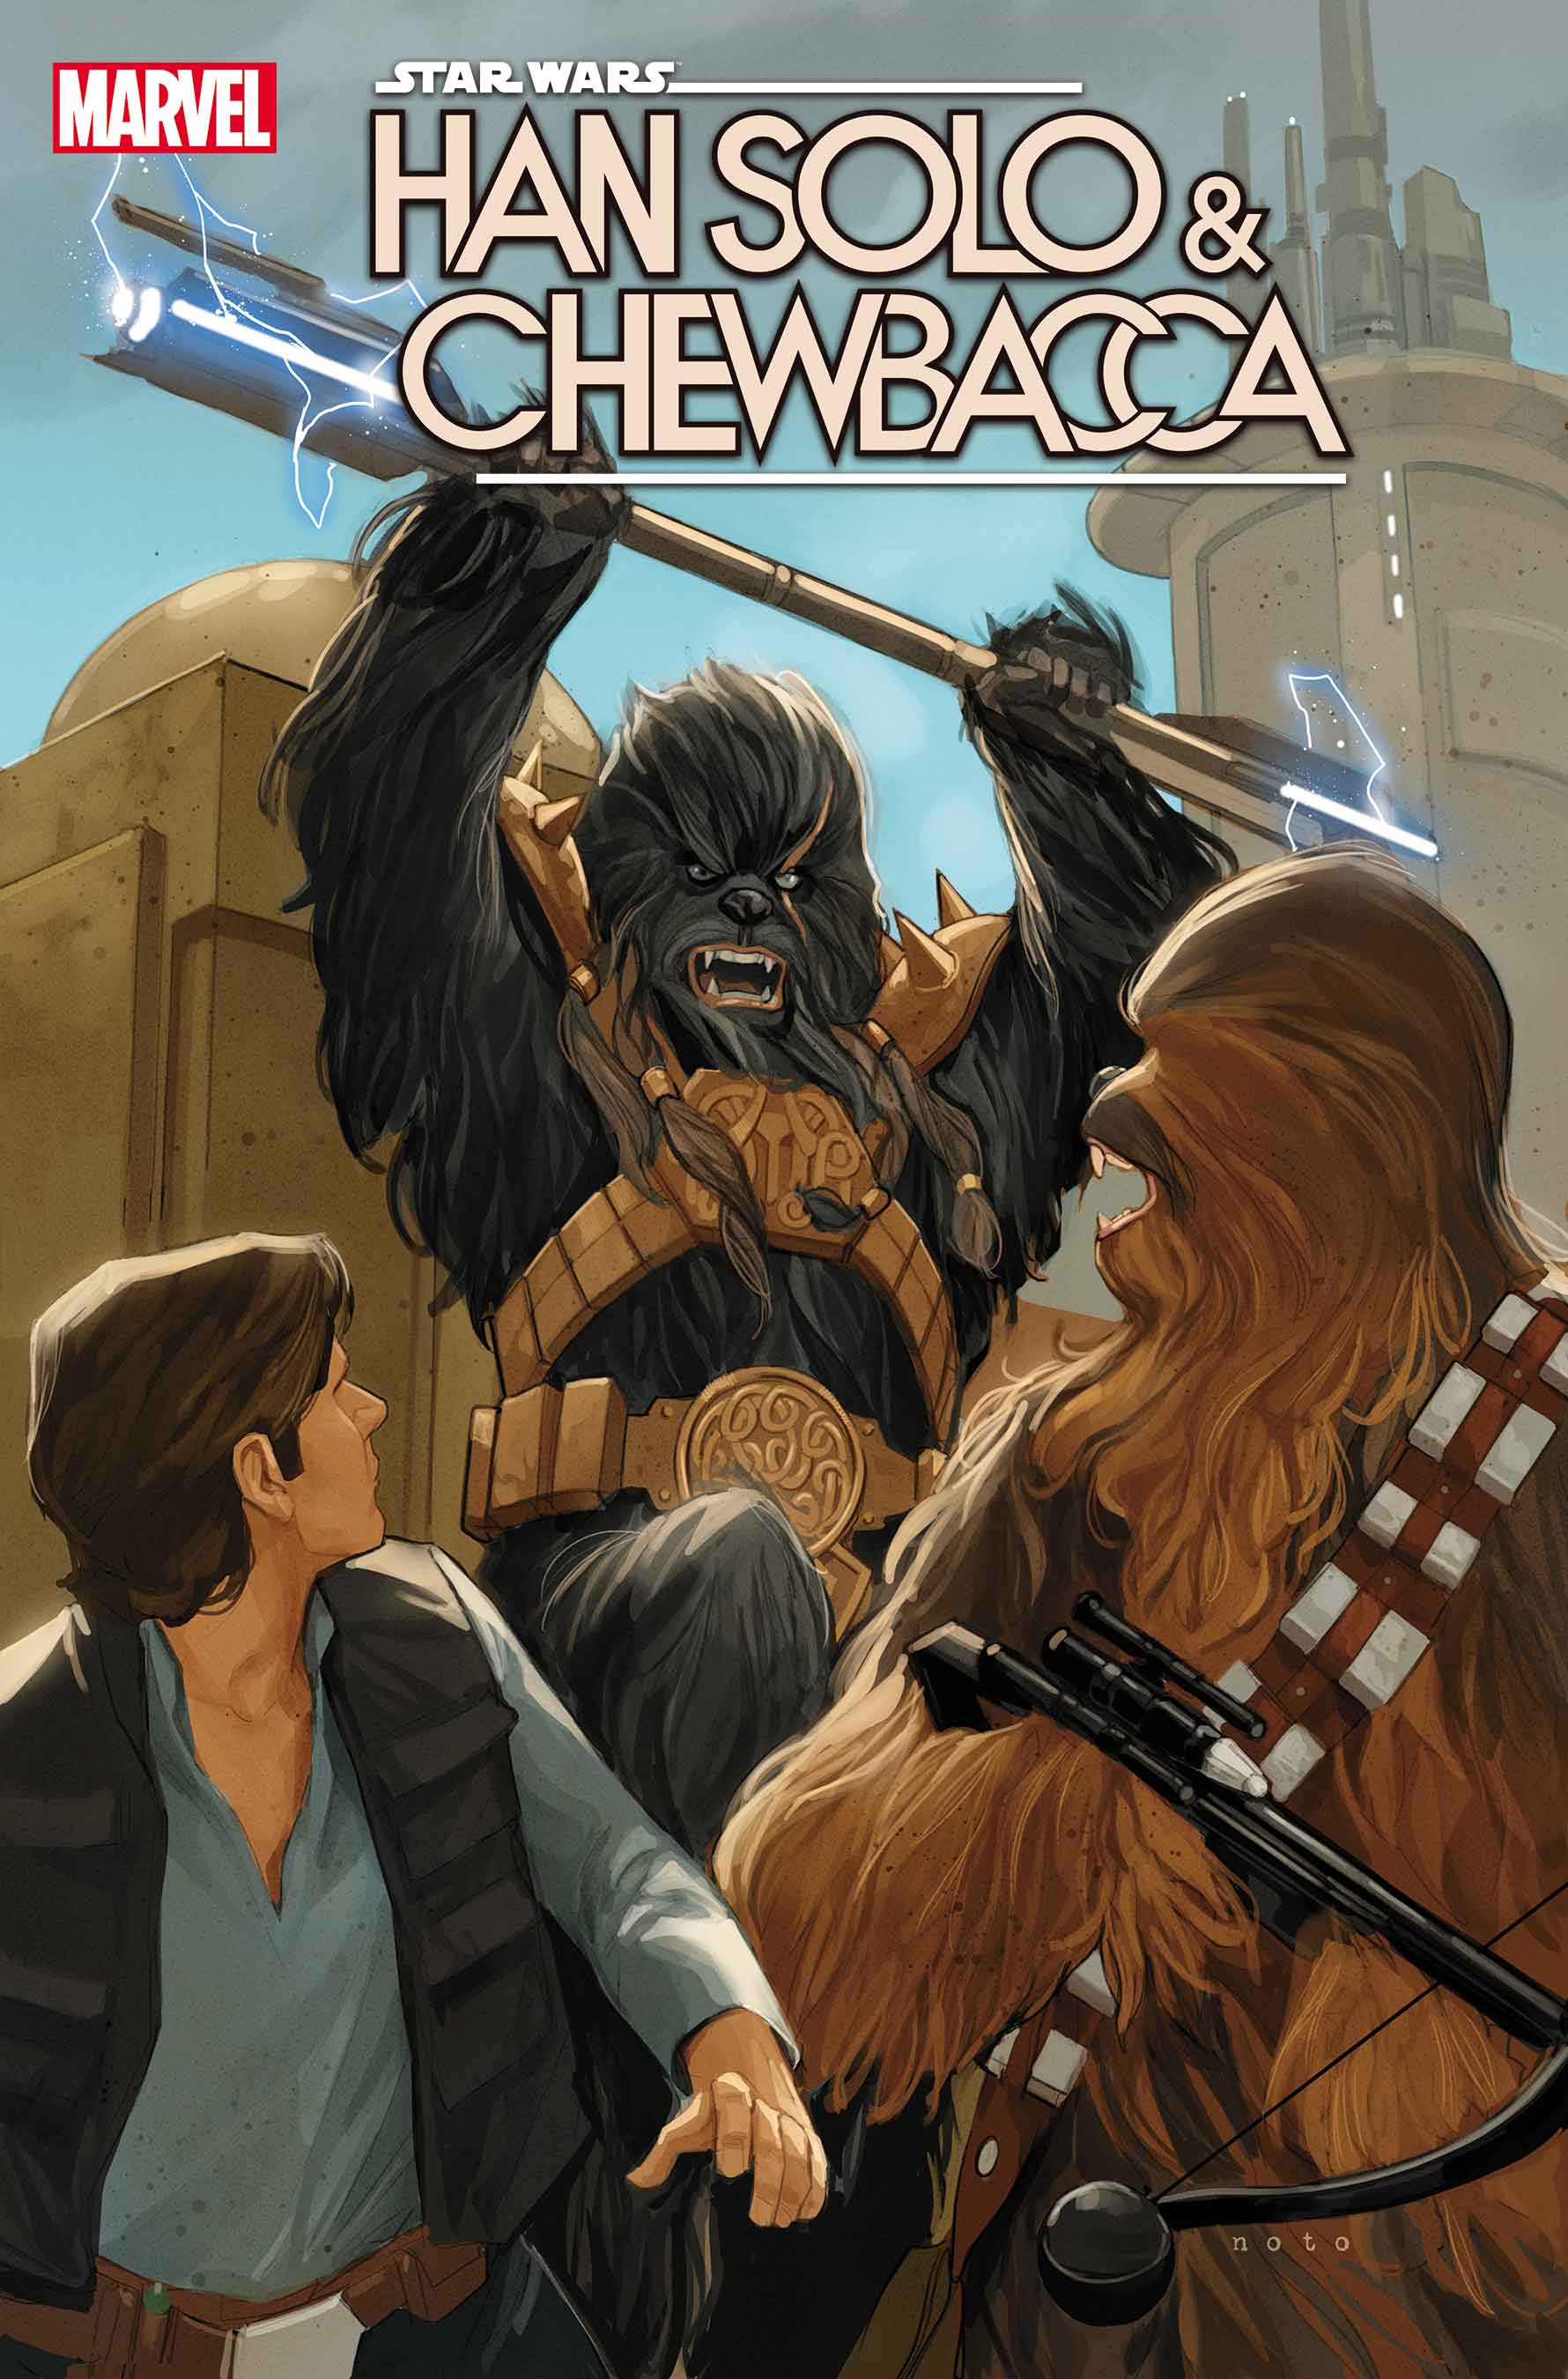 Star Wars: Han Solo & Chewbacca (2022) #4